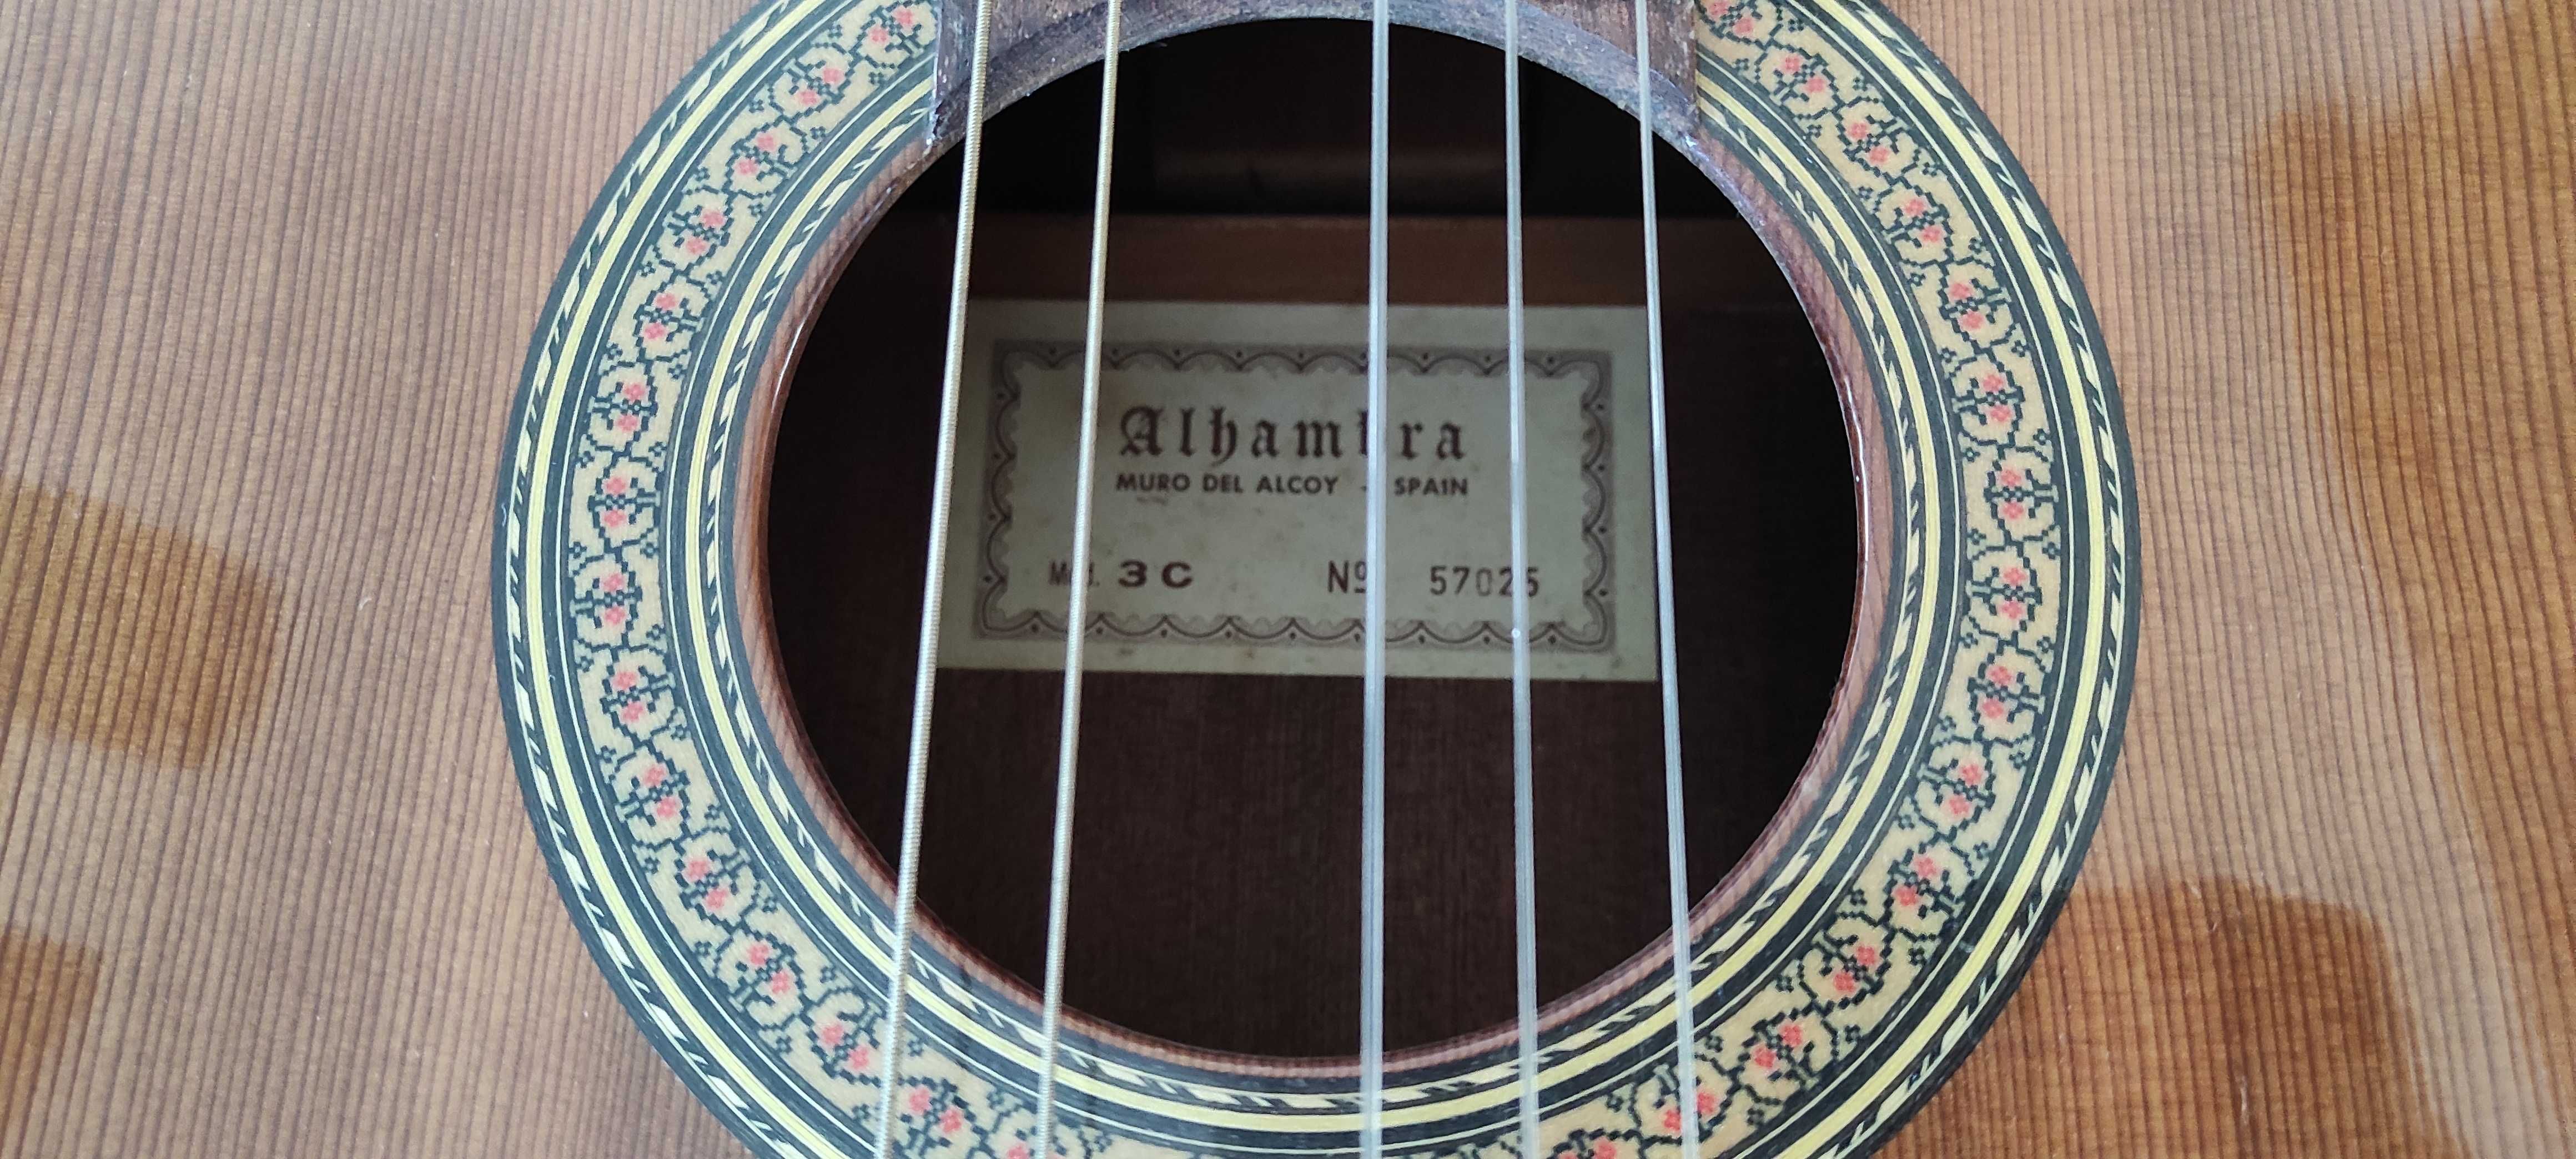 Viola Alhambra 3C